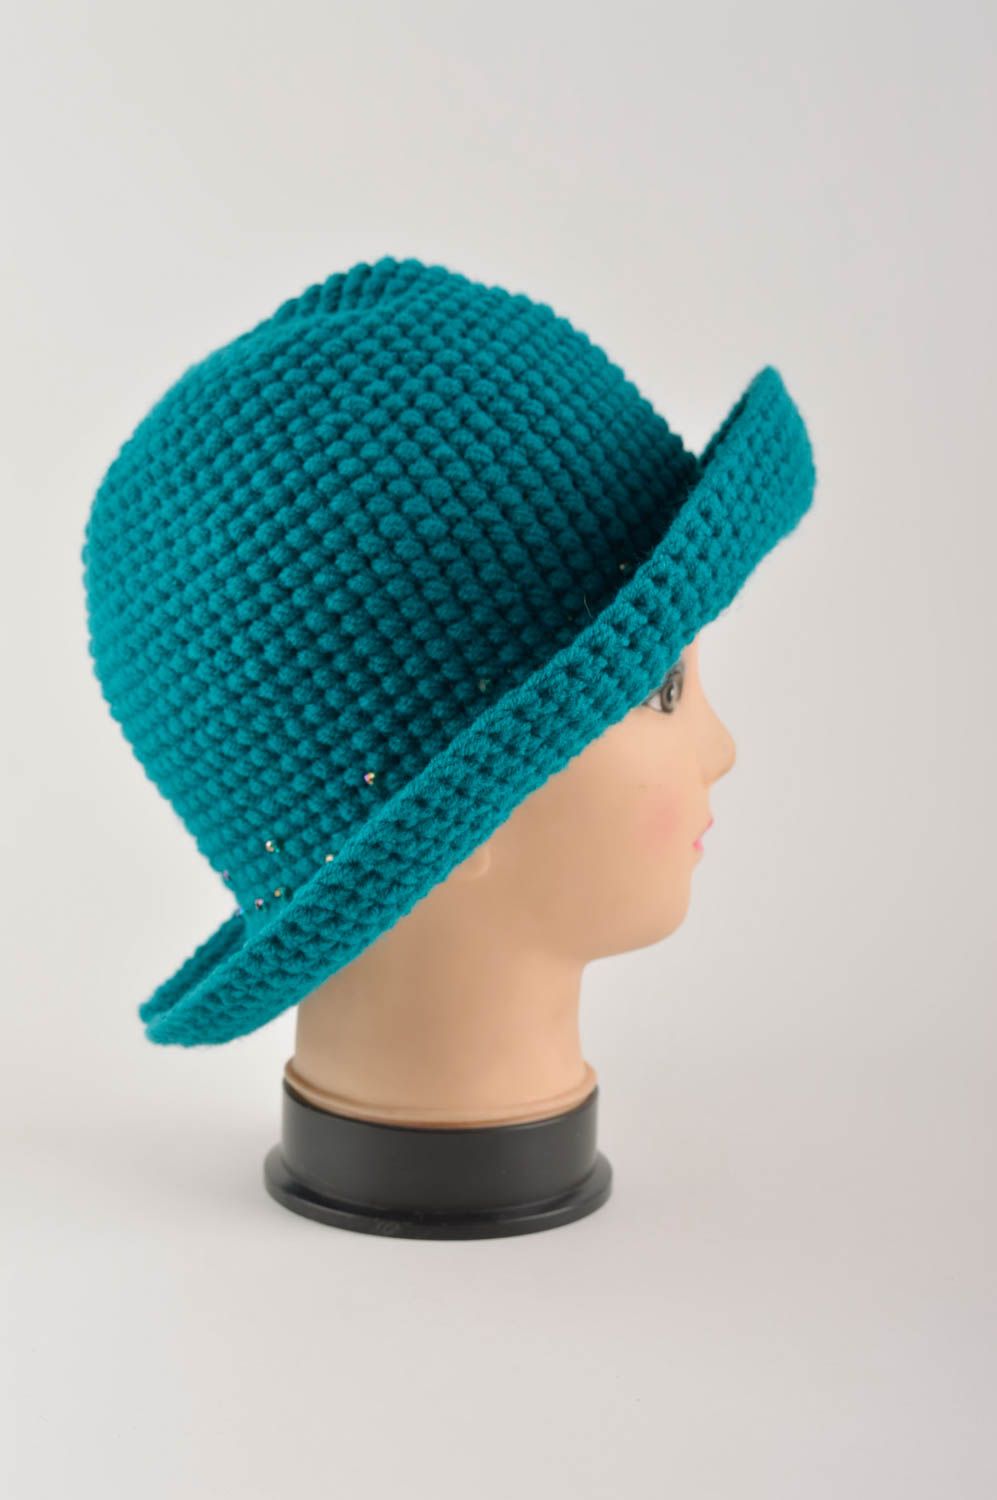 Handmade hat designer hat unusual headwear for girls gift ideas hat for coat photo 4